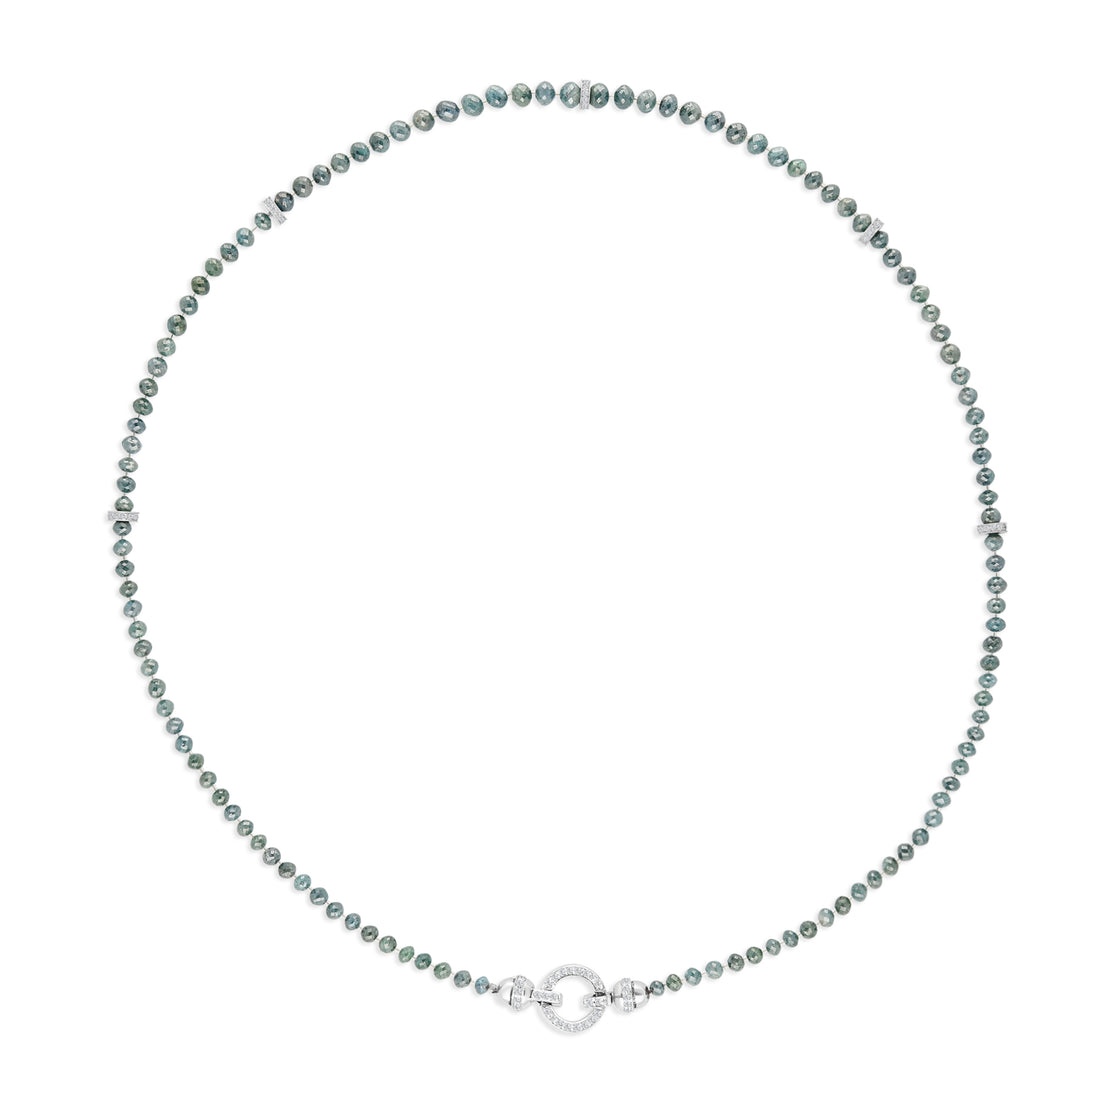 Greyish Green Diamond Beaded Necklace - 48.76 Carat